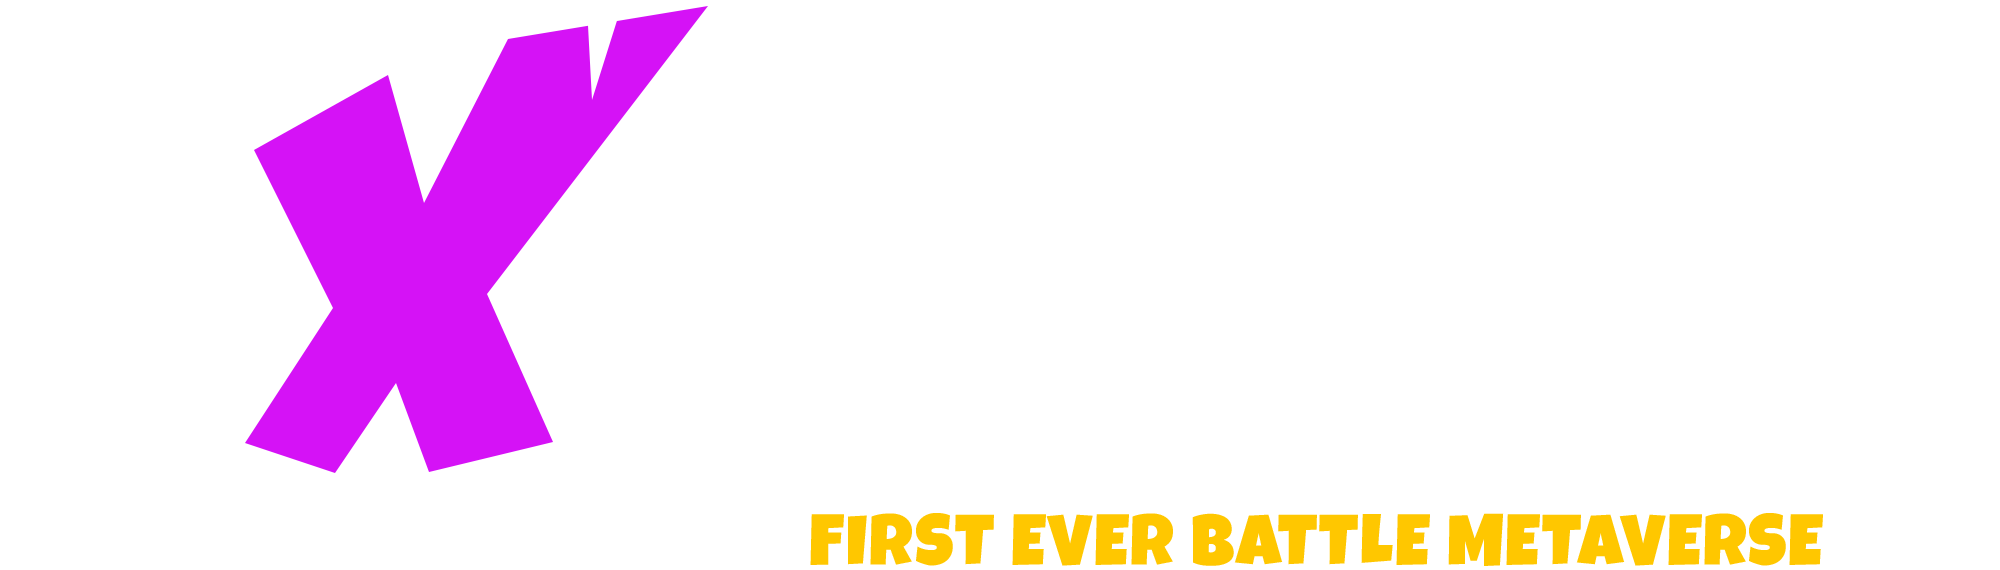 EXVERSE - First ever battle metaverse